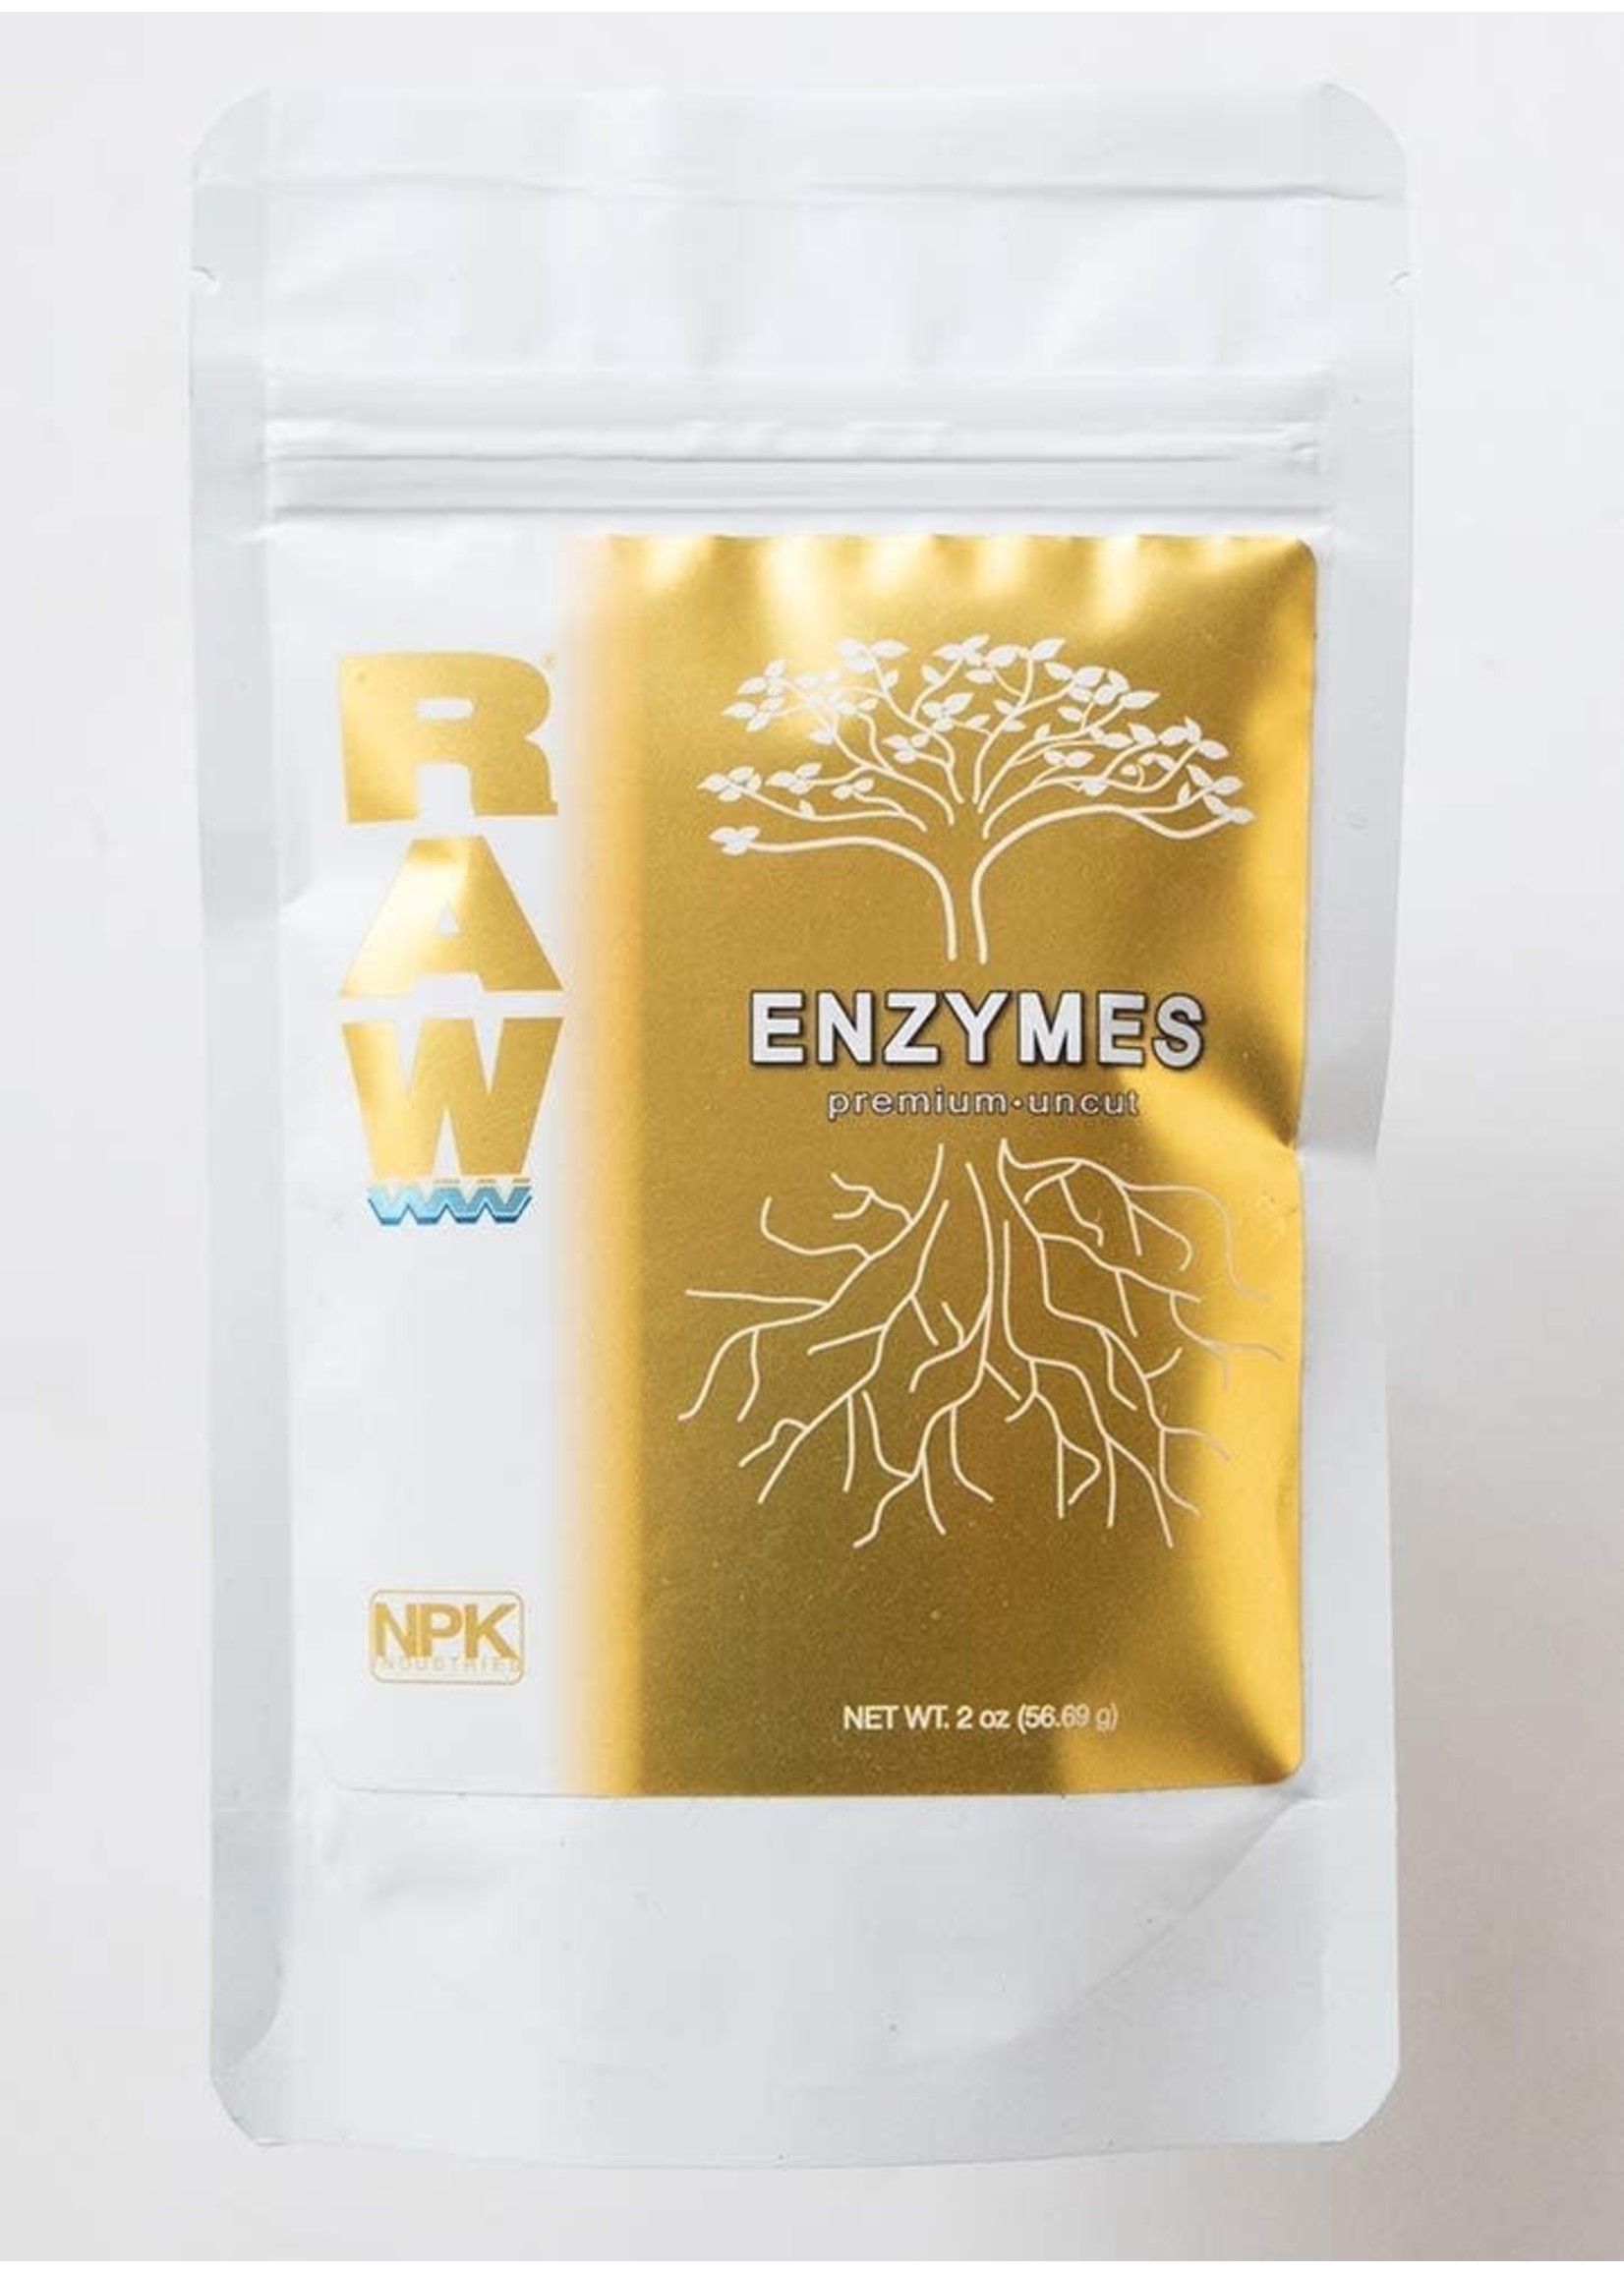 NPK Raw Enzymes